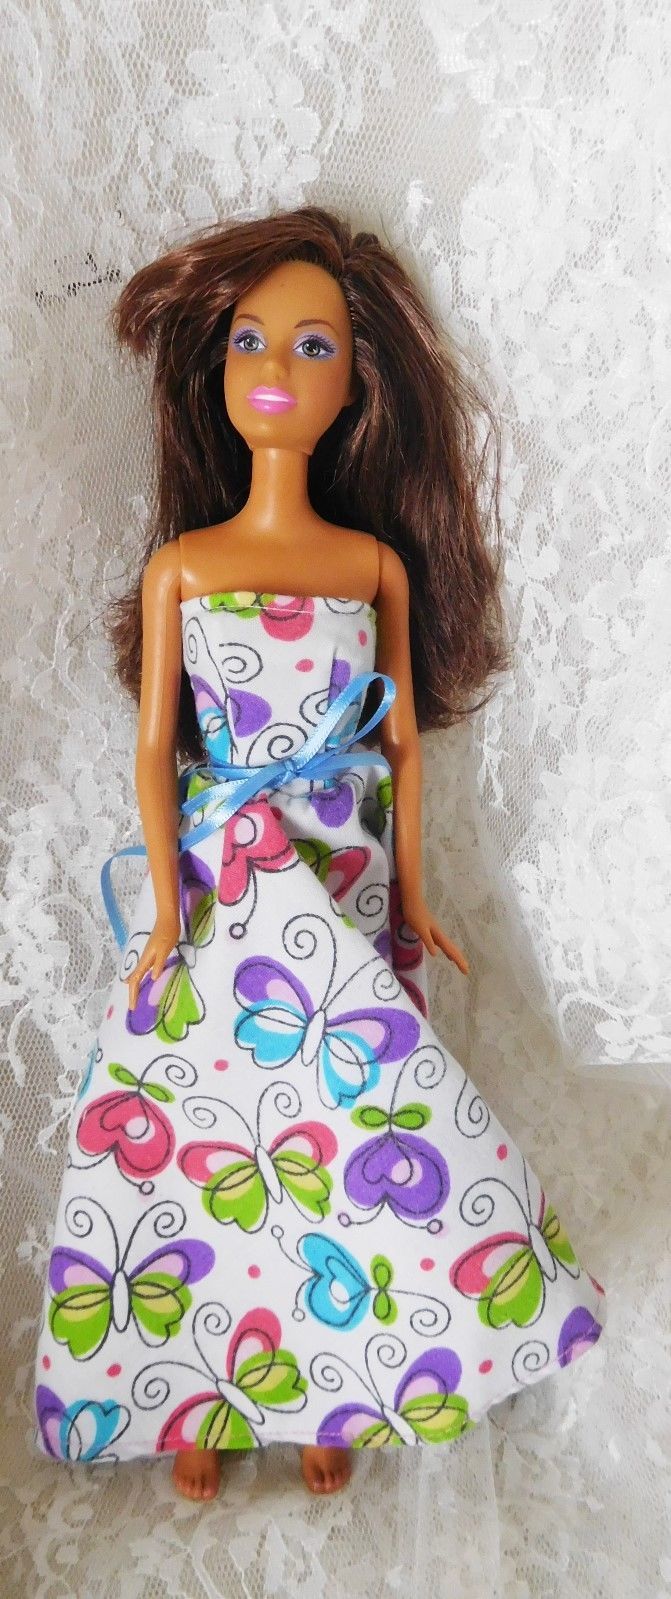 mattel 1999 barbie